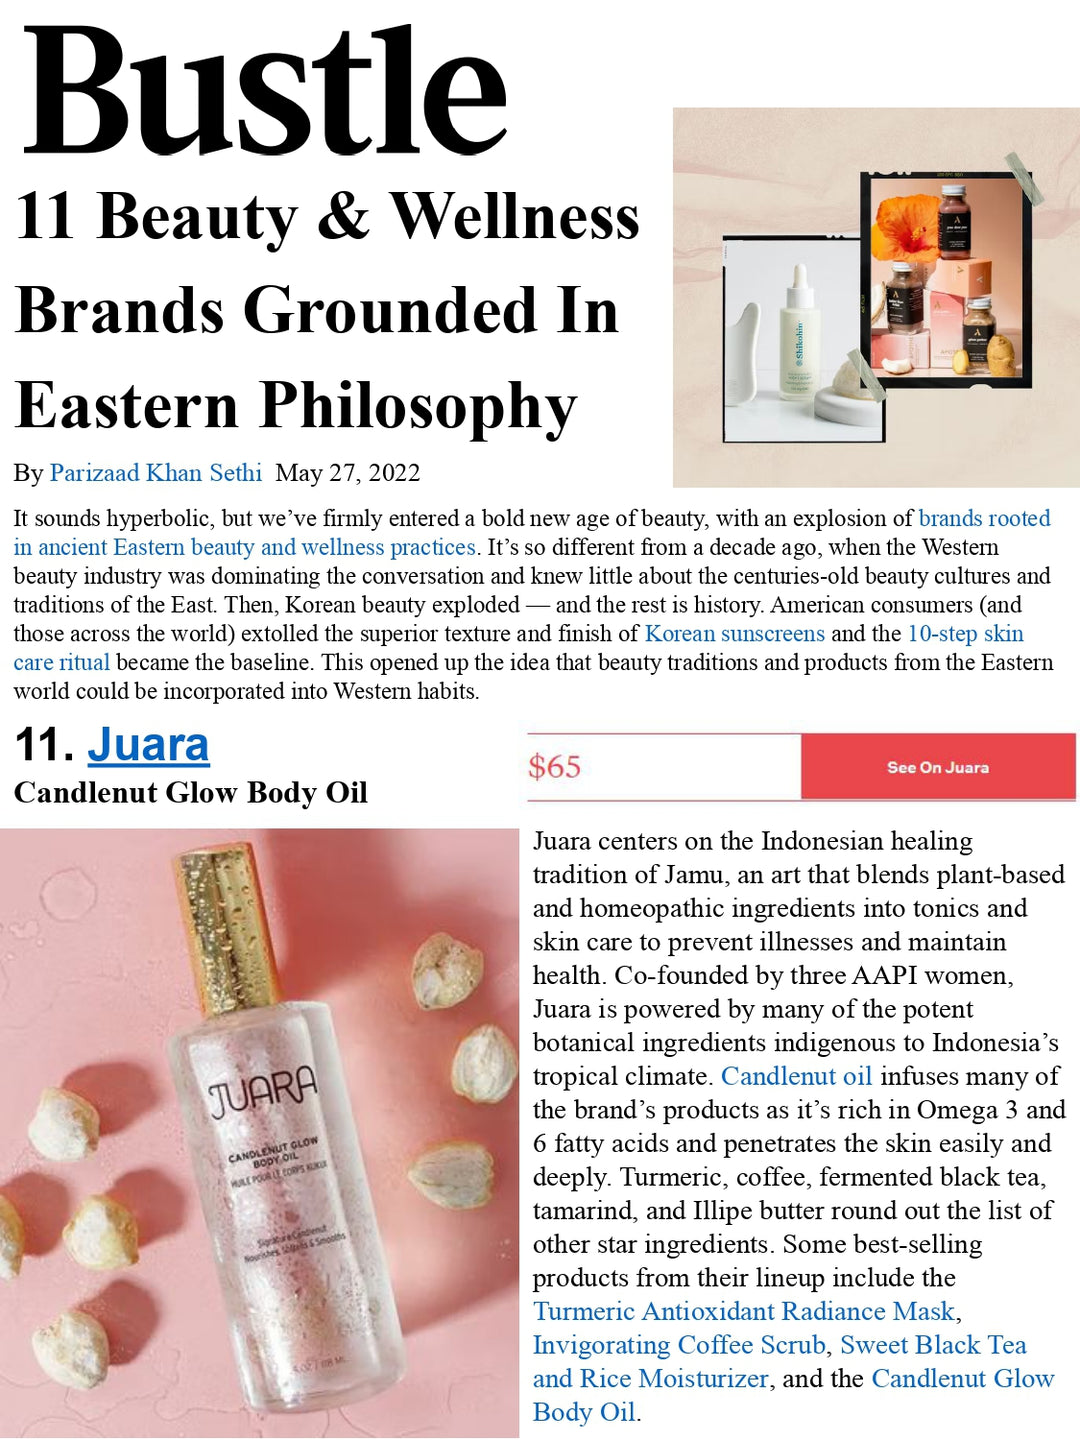 BUSTLE: 11 Beauty & Wellness Brands Grounded In Eastern Philosophy